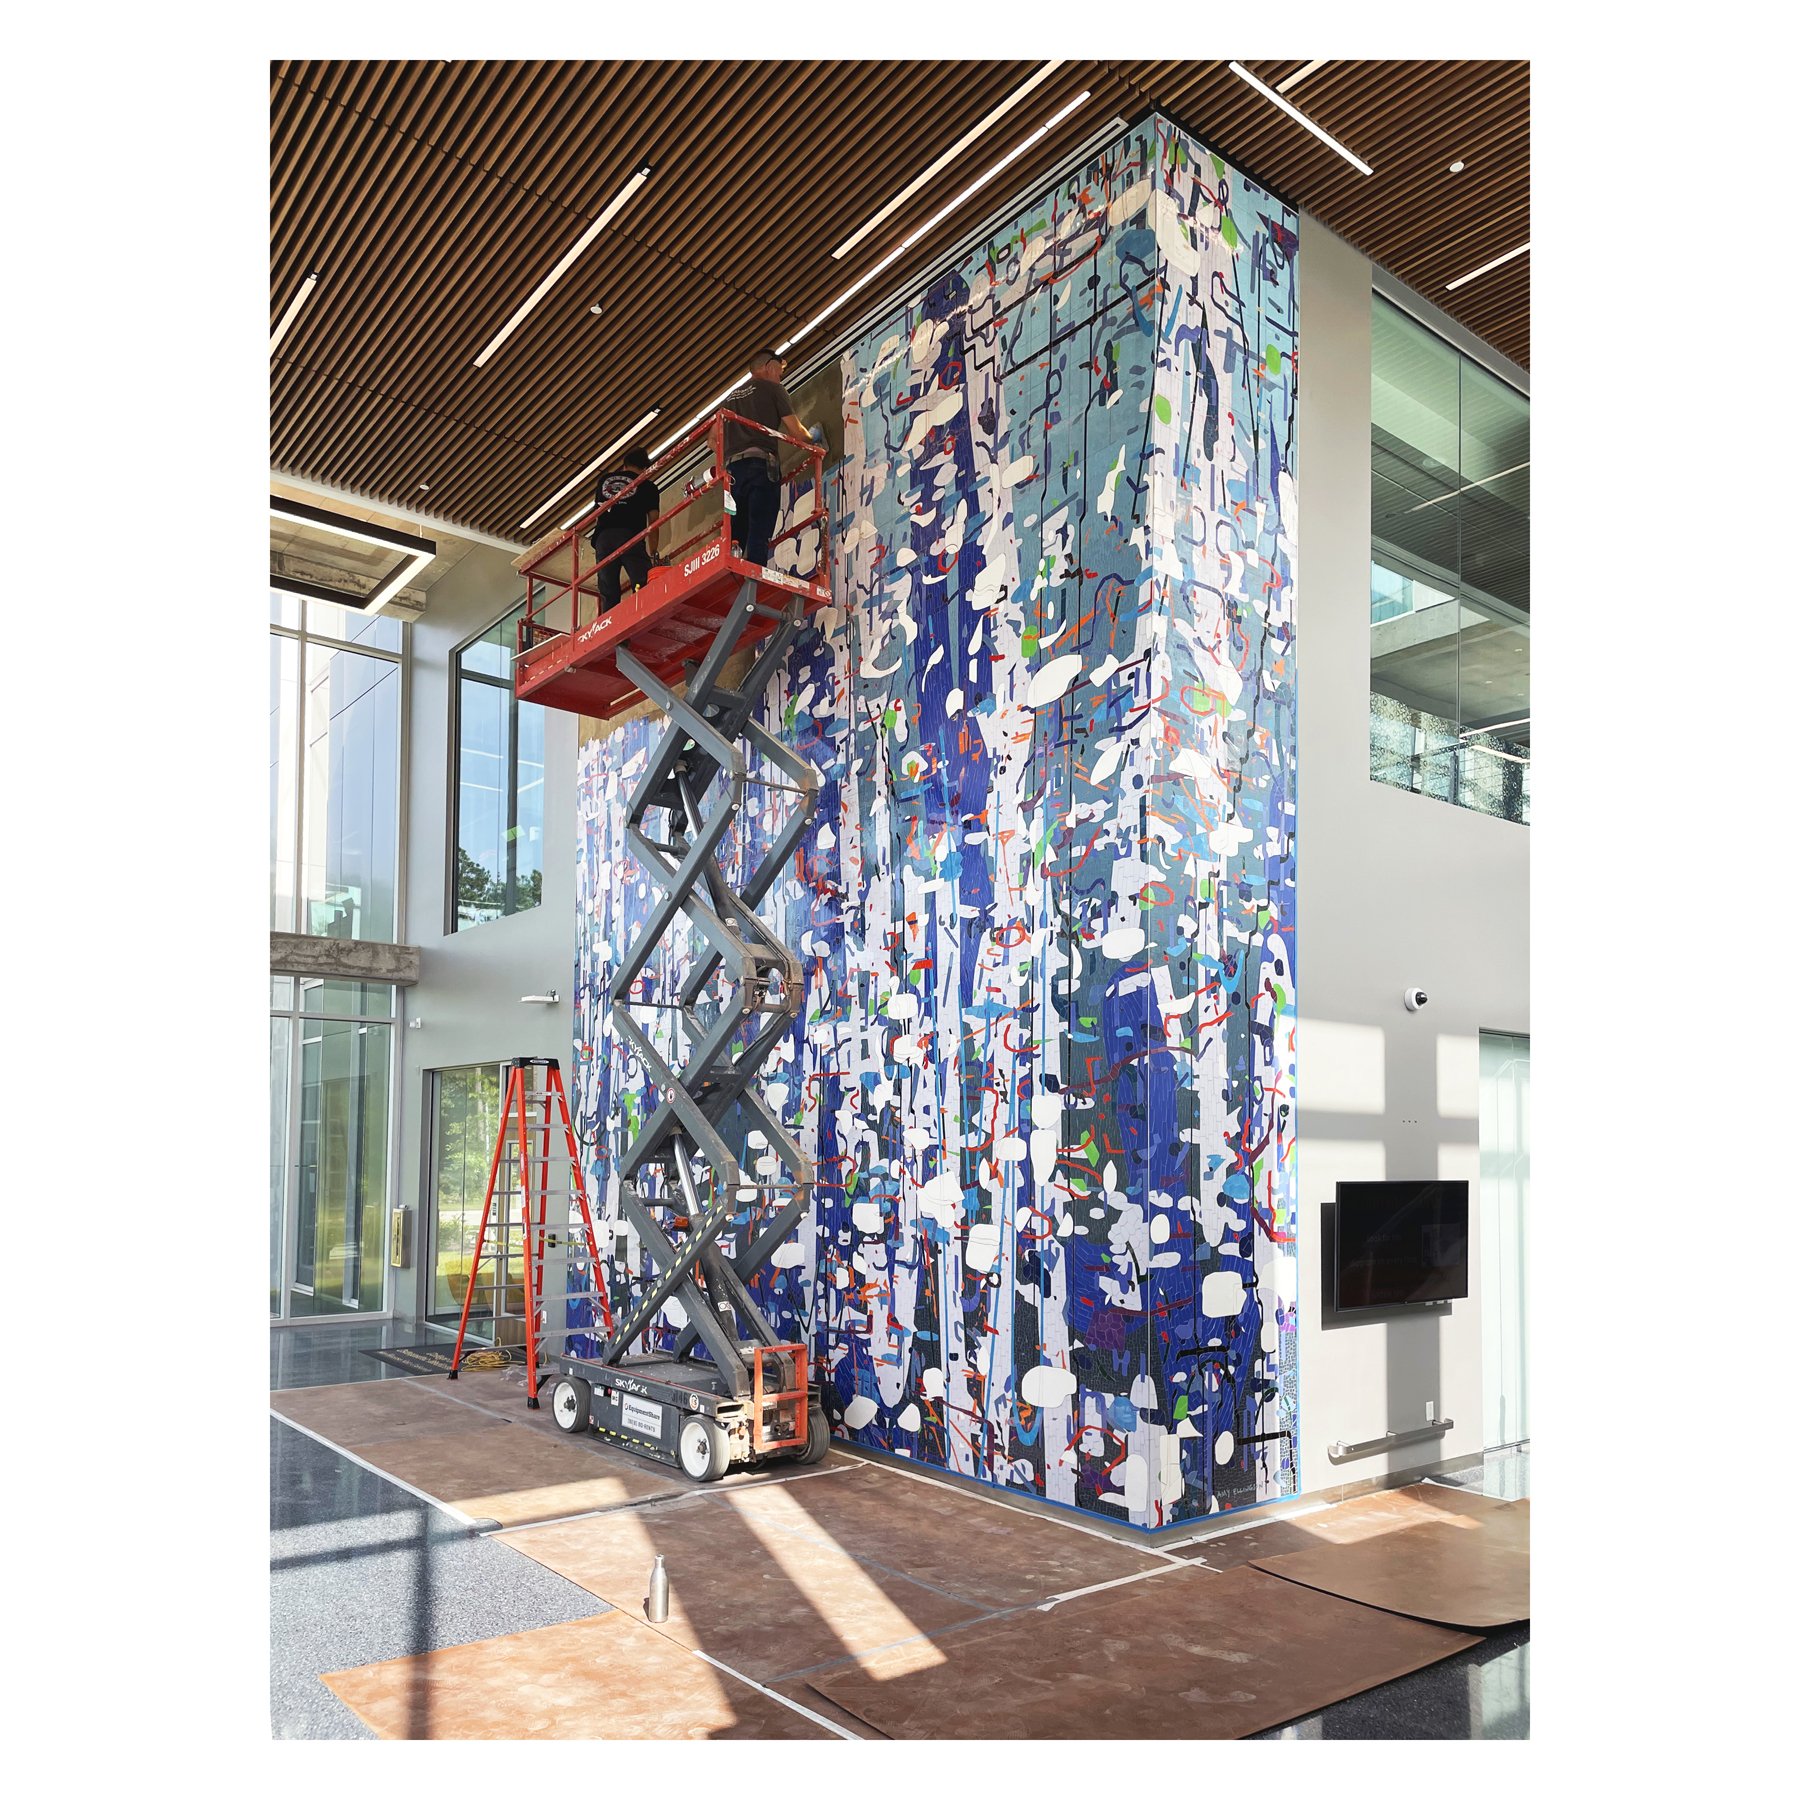  [installation]  Large Variation: Blue , 2021 Ceramic mosaic 26 x 26 feet  Sam Houston State University, College of Osteopathic Medicine Building, Conroe, Texas 